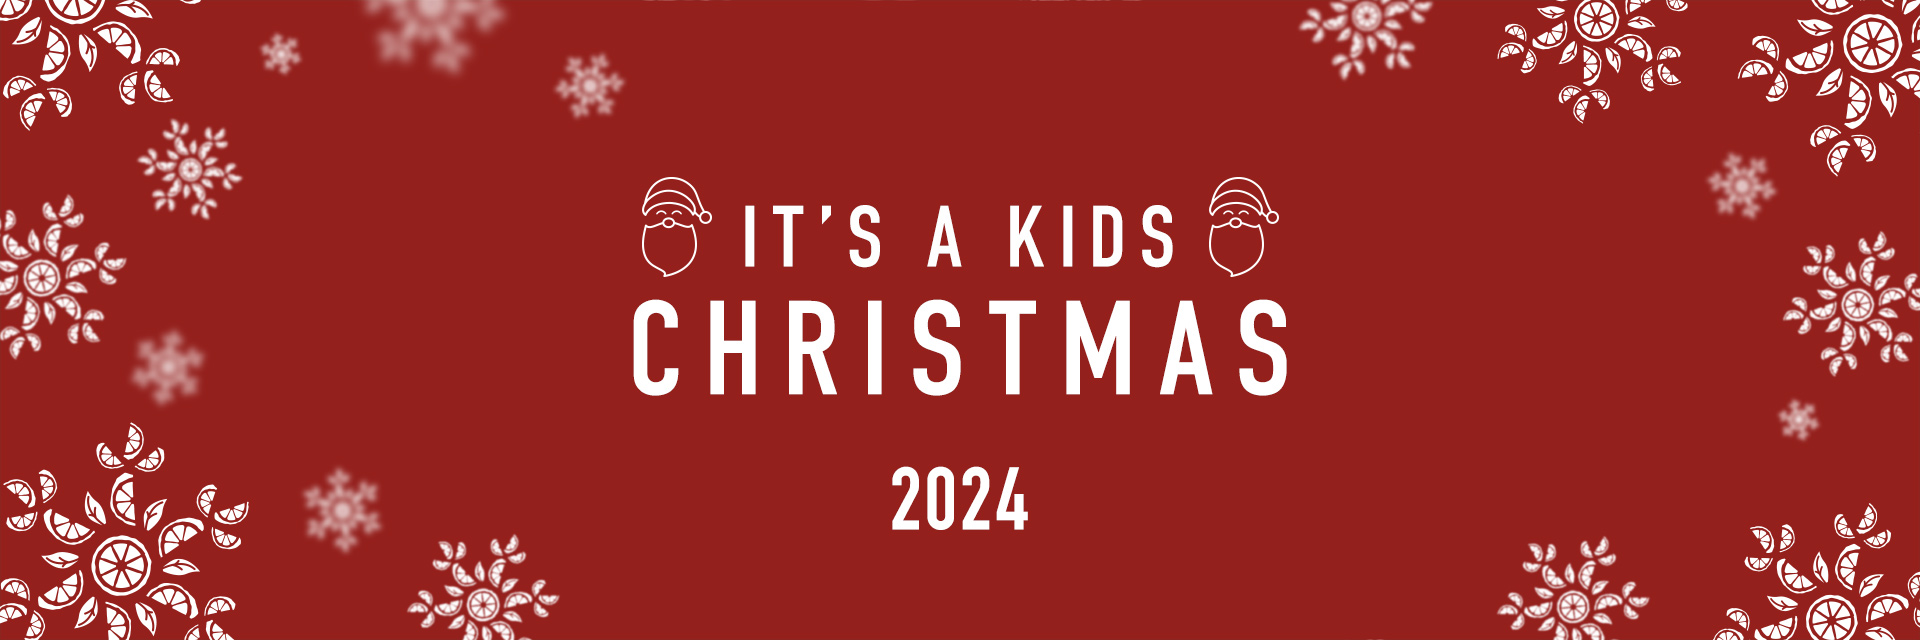 Kids Christmas Menu 2024 at Harvester Quayside MediaCityUK